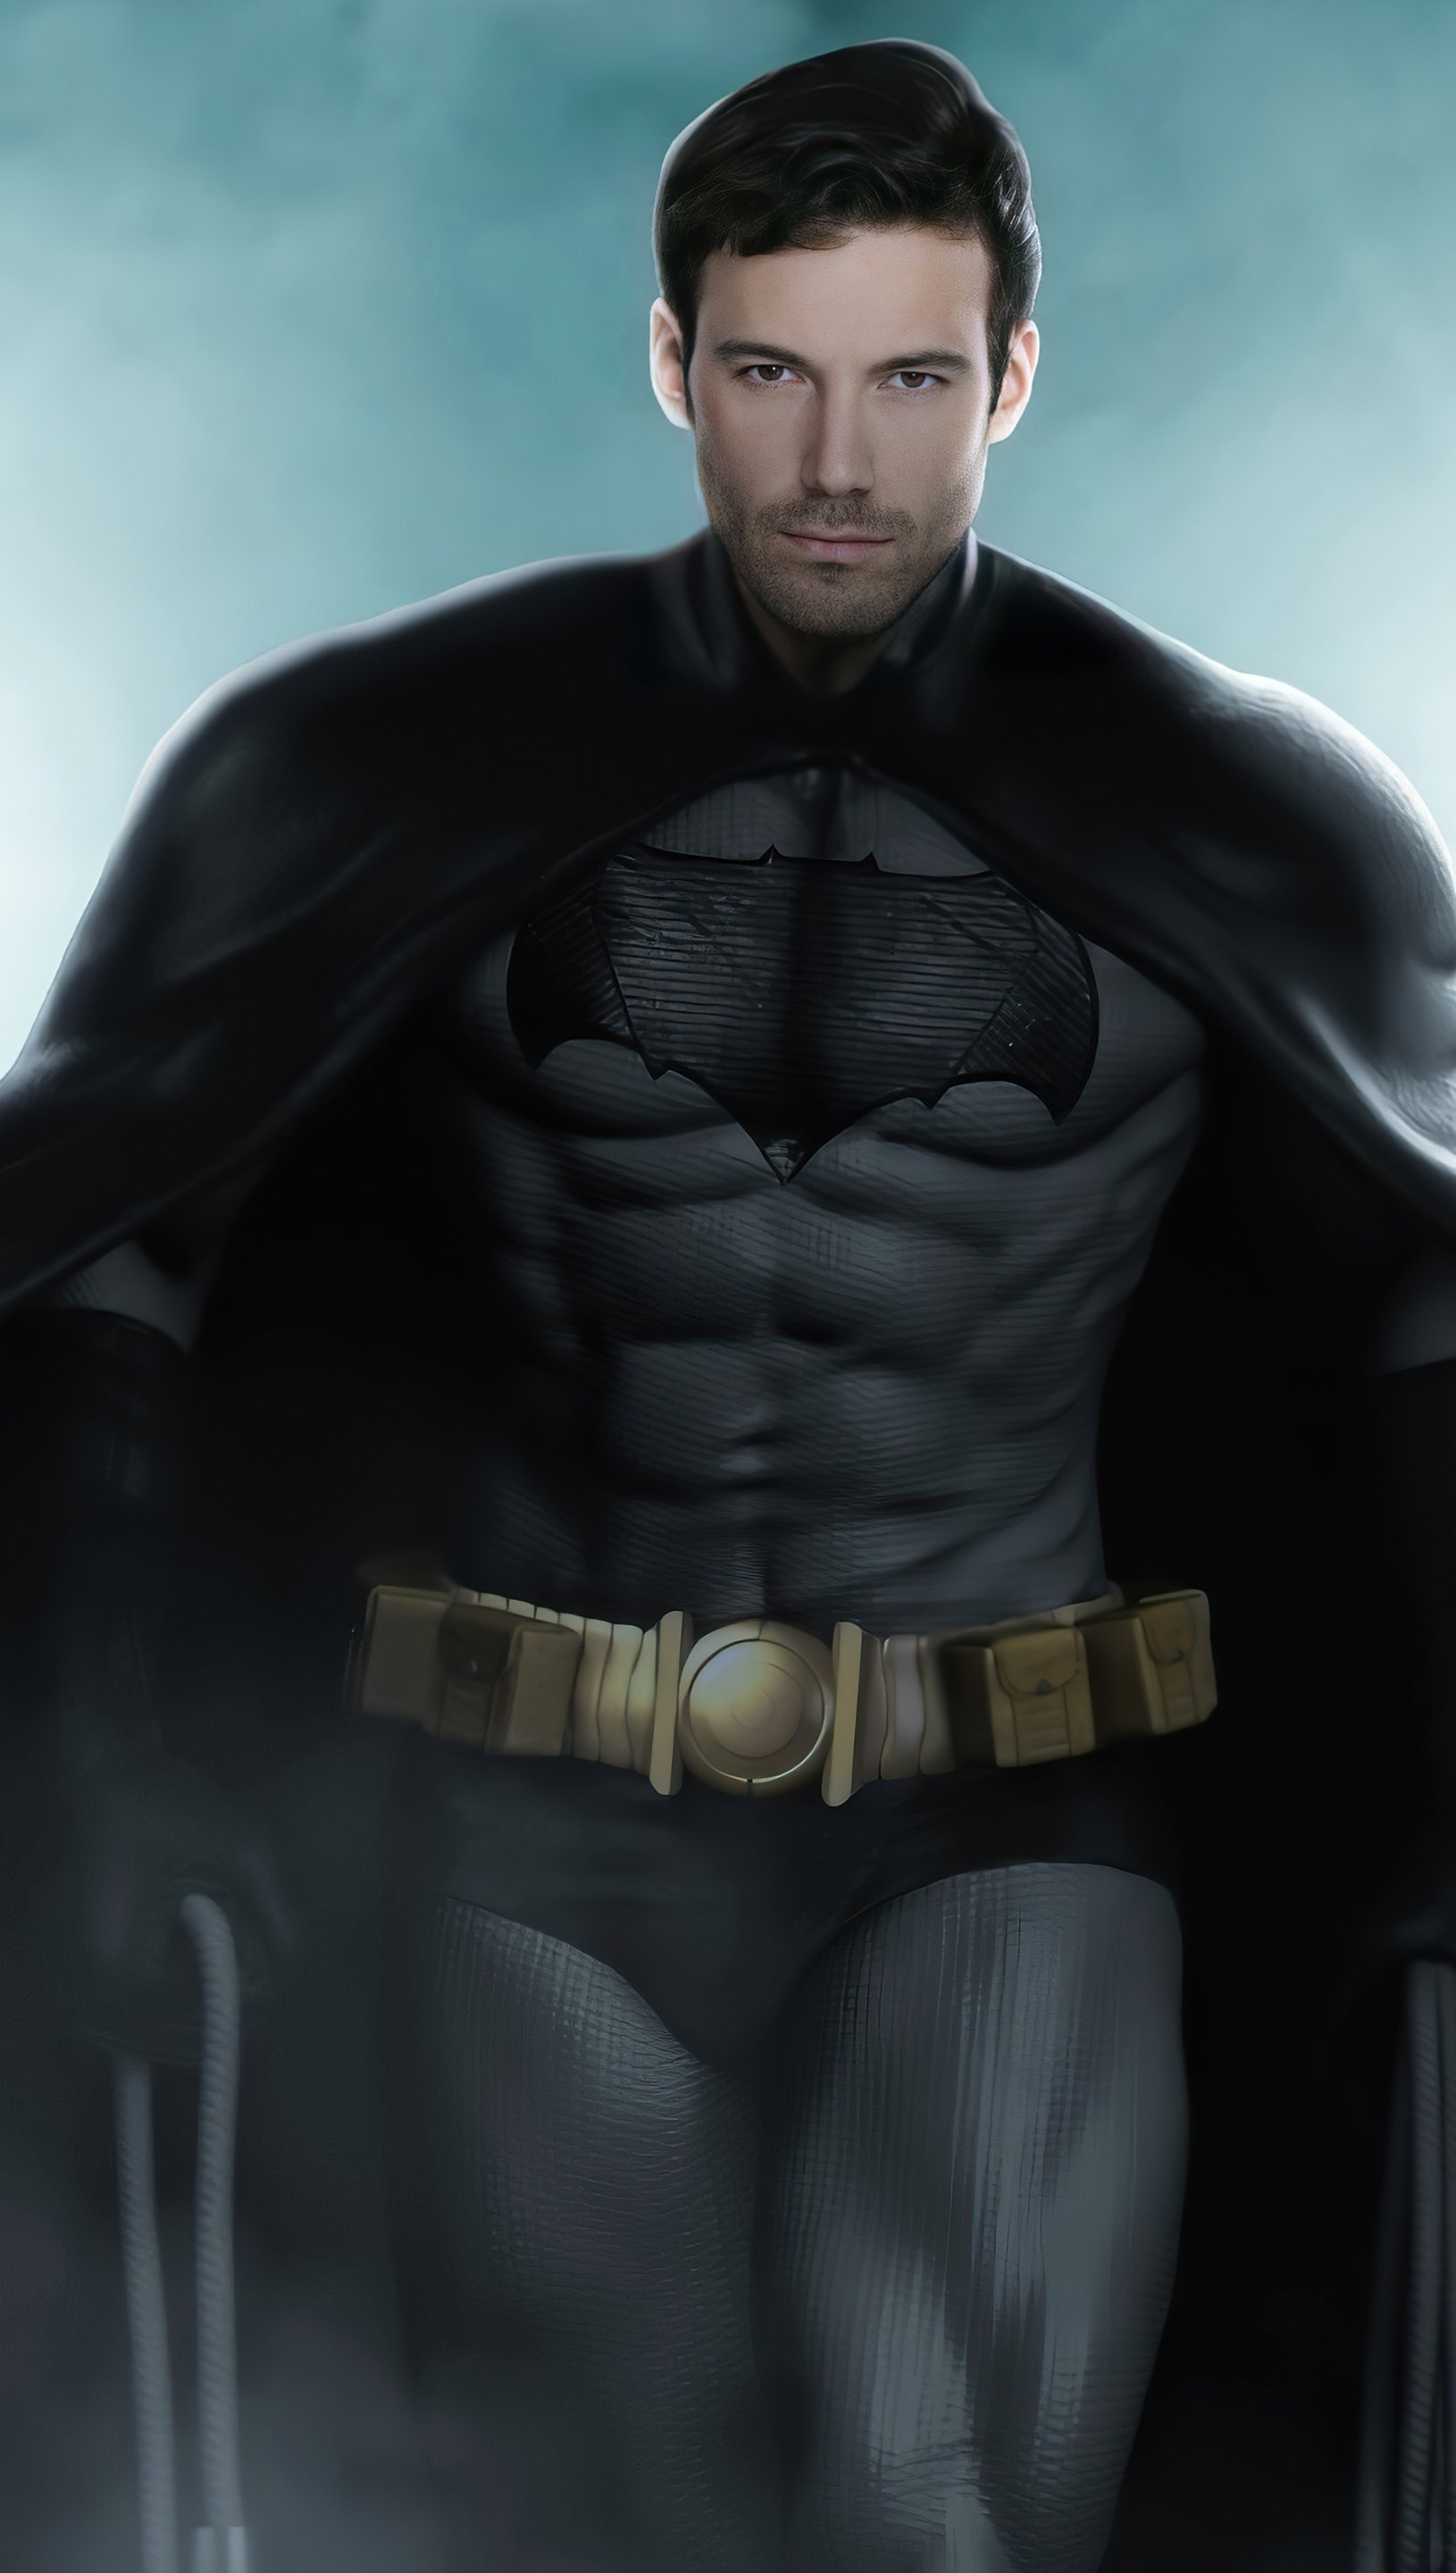 Batman Ben Affleck 2020 4k HD Superheroes 4k Wallpapers Images  Backgrounds Photos and Pictures